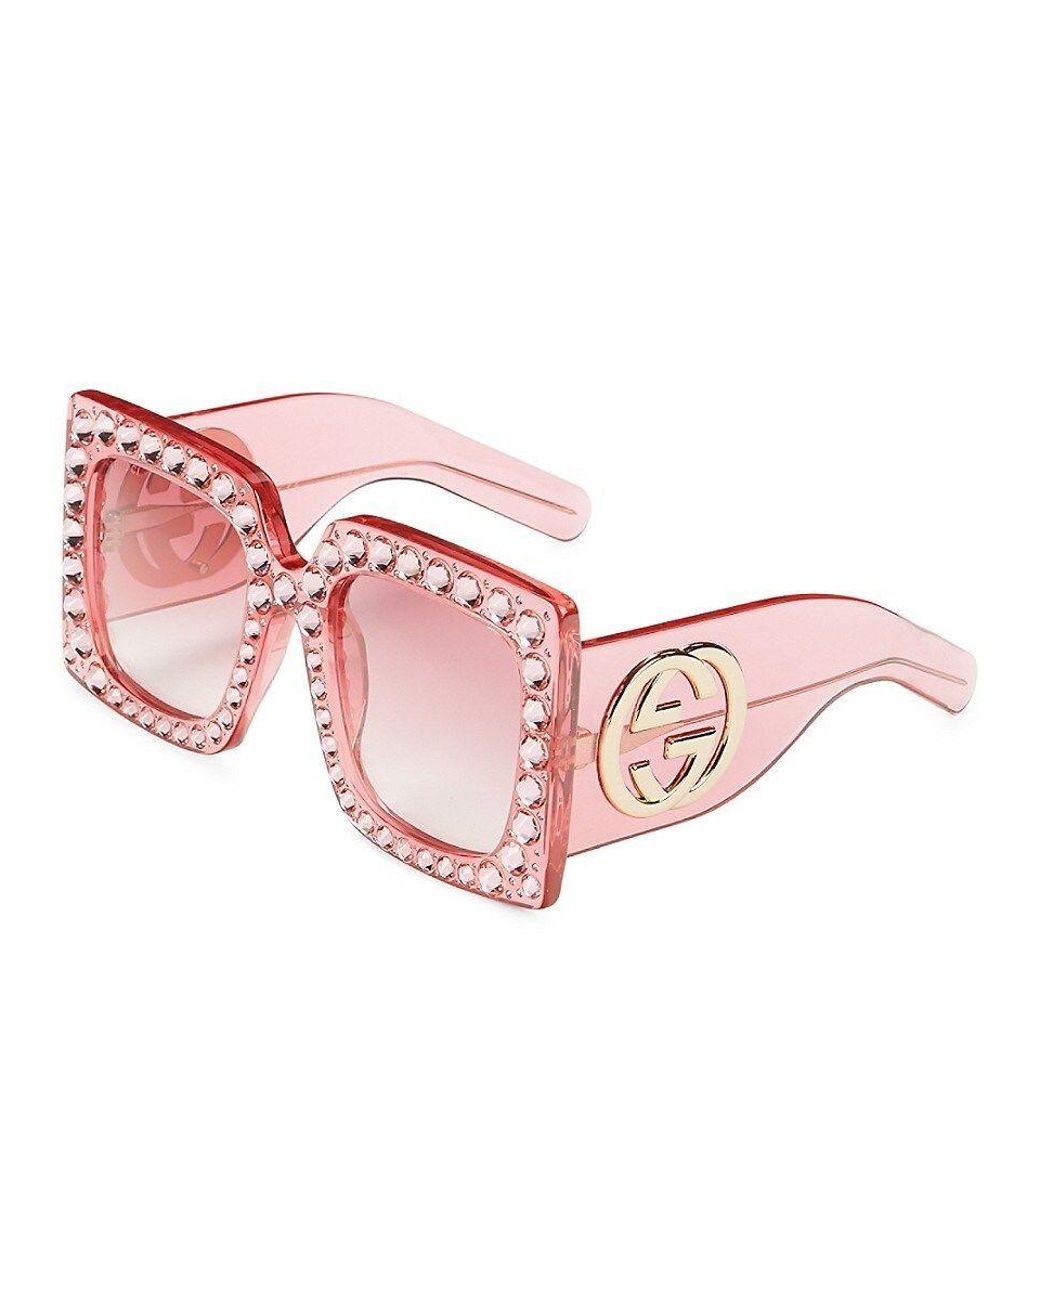 Gucci 57mm Rhinestone Square Sunglasses in Pink | Lyst